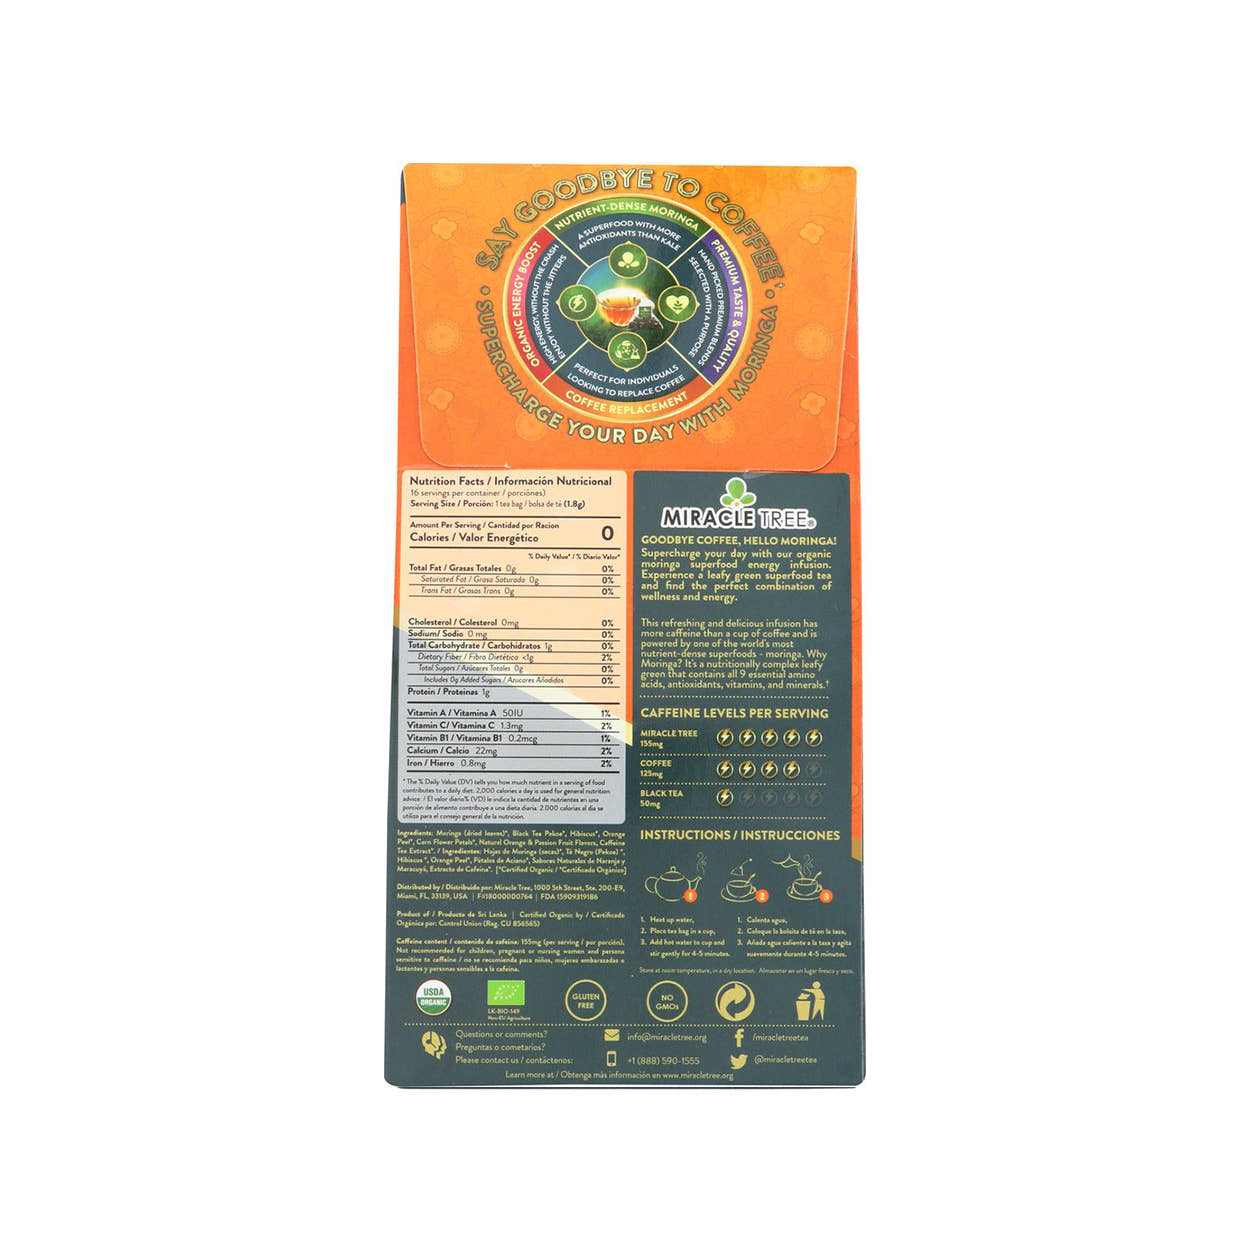 Organic Moringa Energy Tea - Orange Passionfruit